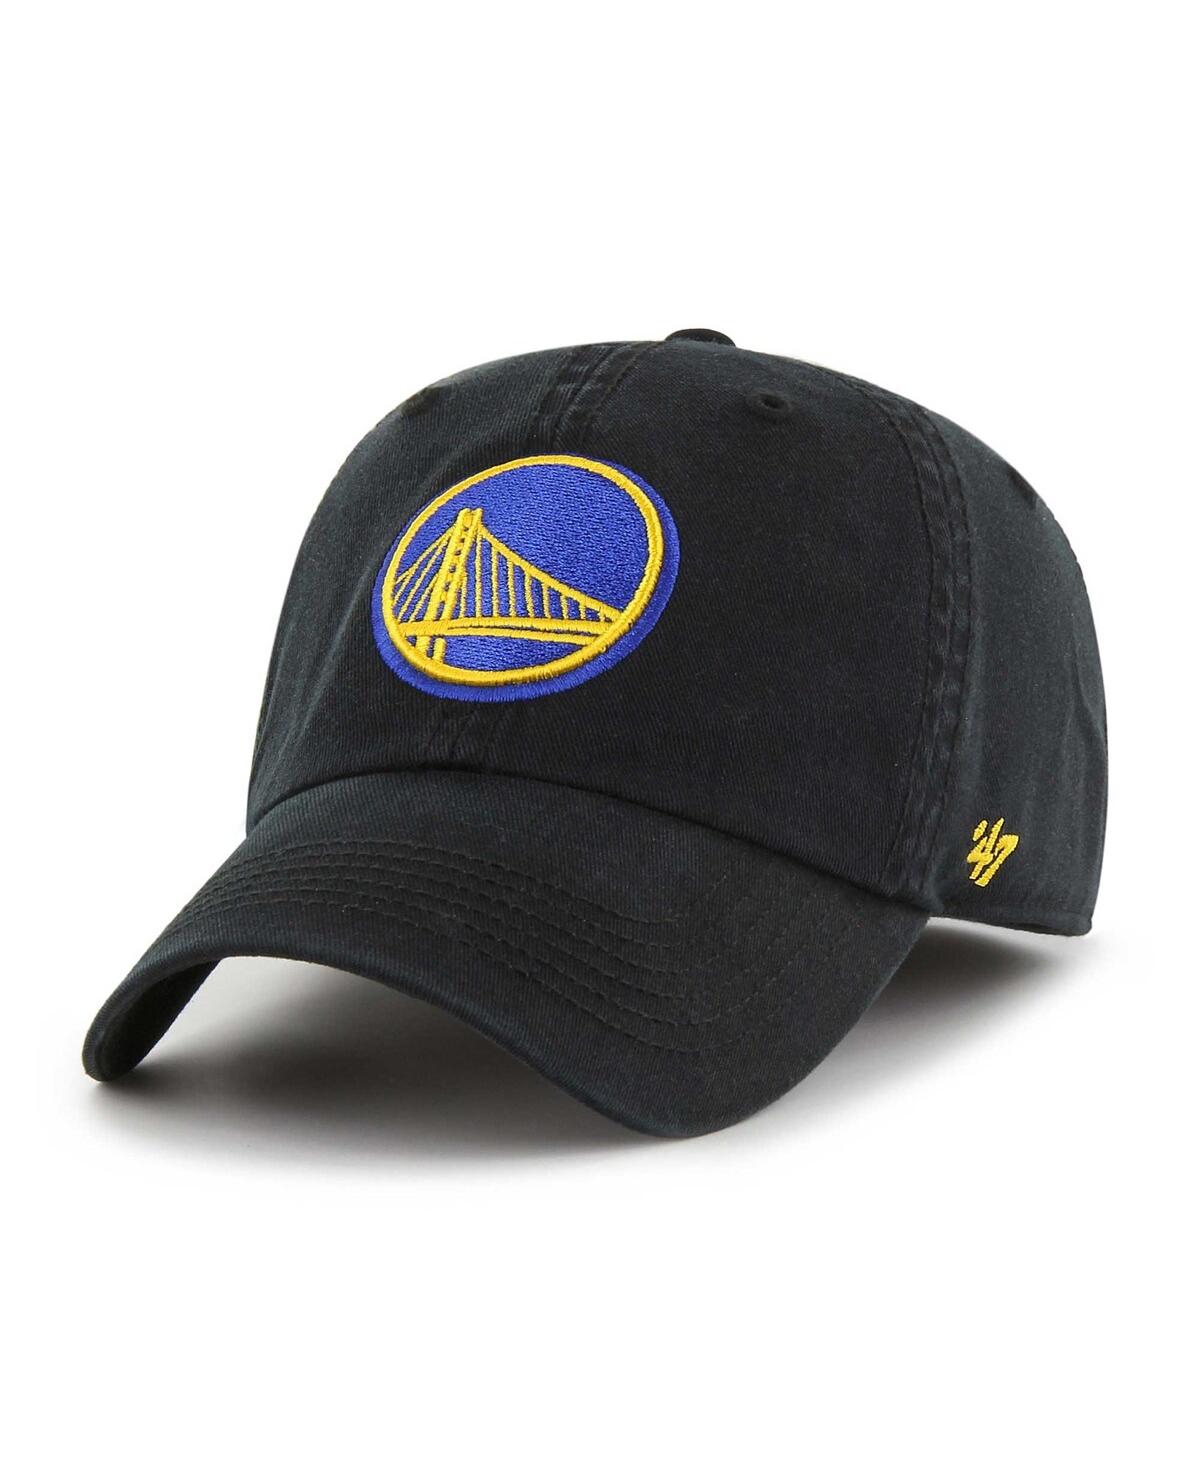 Men's '47 Brand Black Golden State Warriors Classic Franchise Fitted Hat - Black